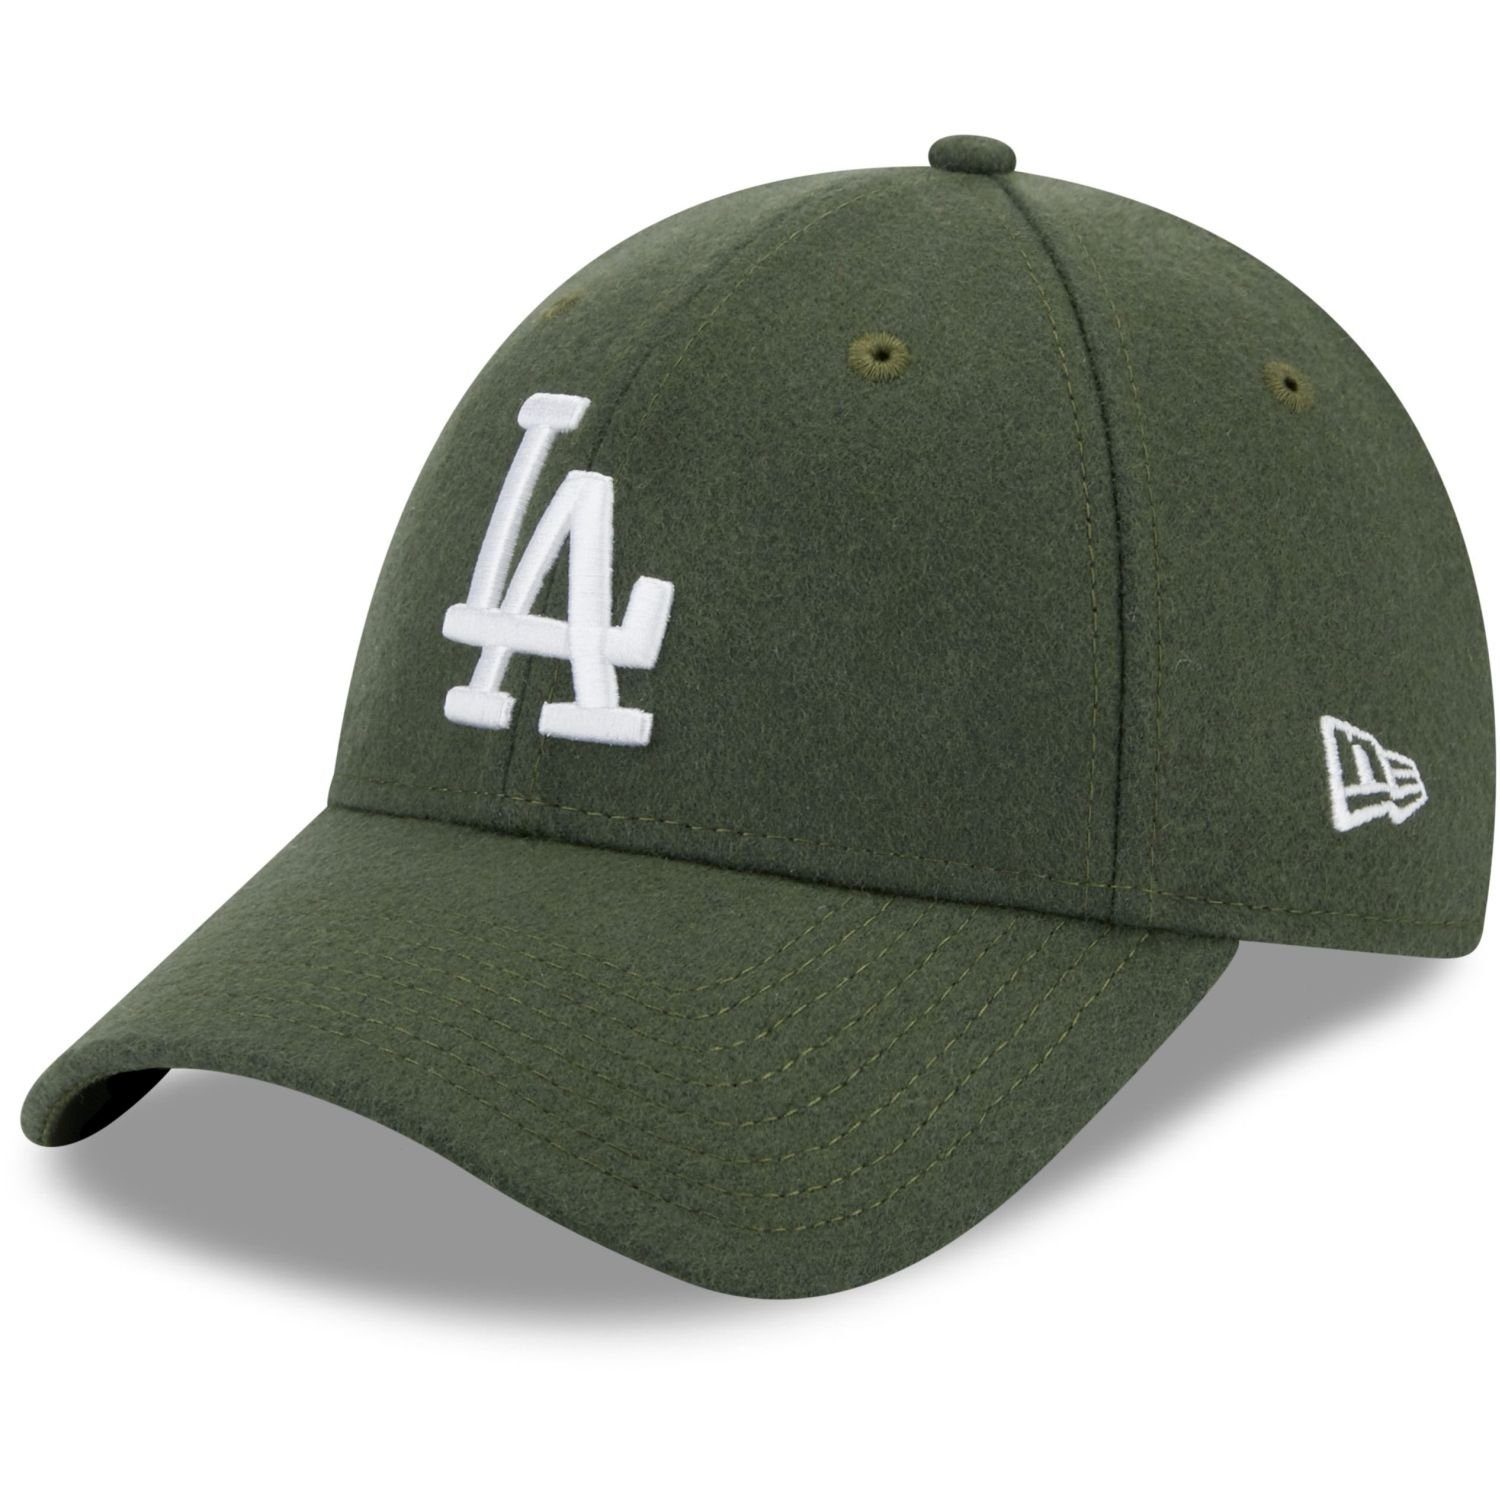 New Era Baseball Cap 9Forty WOOL Los Angeles Dodgers green oliv-meliert